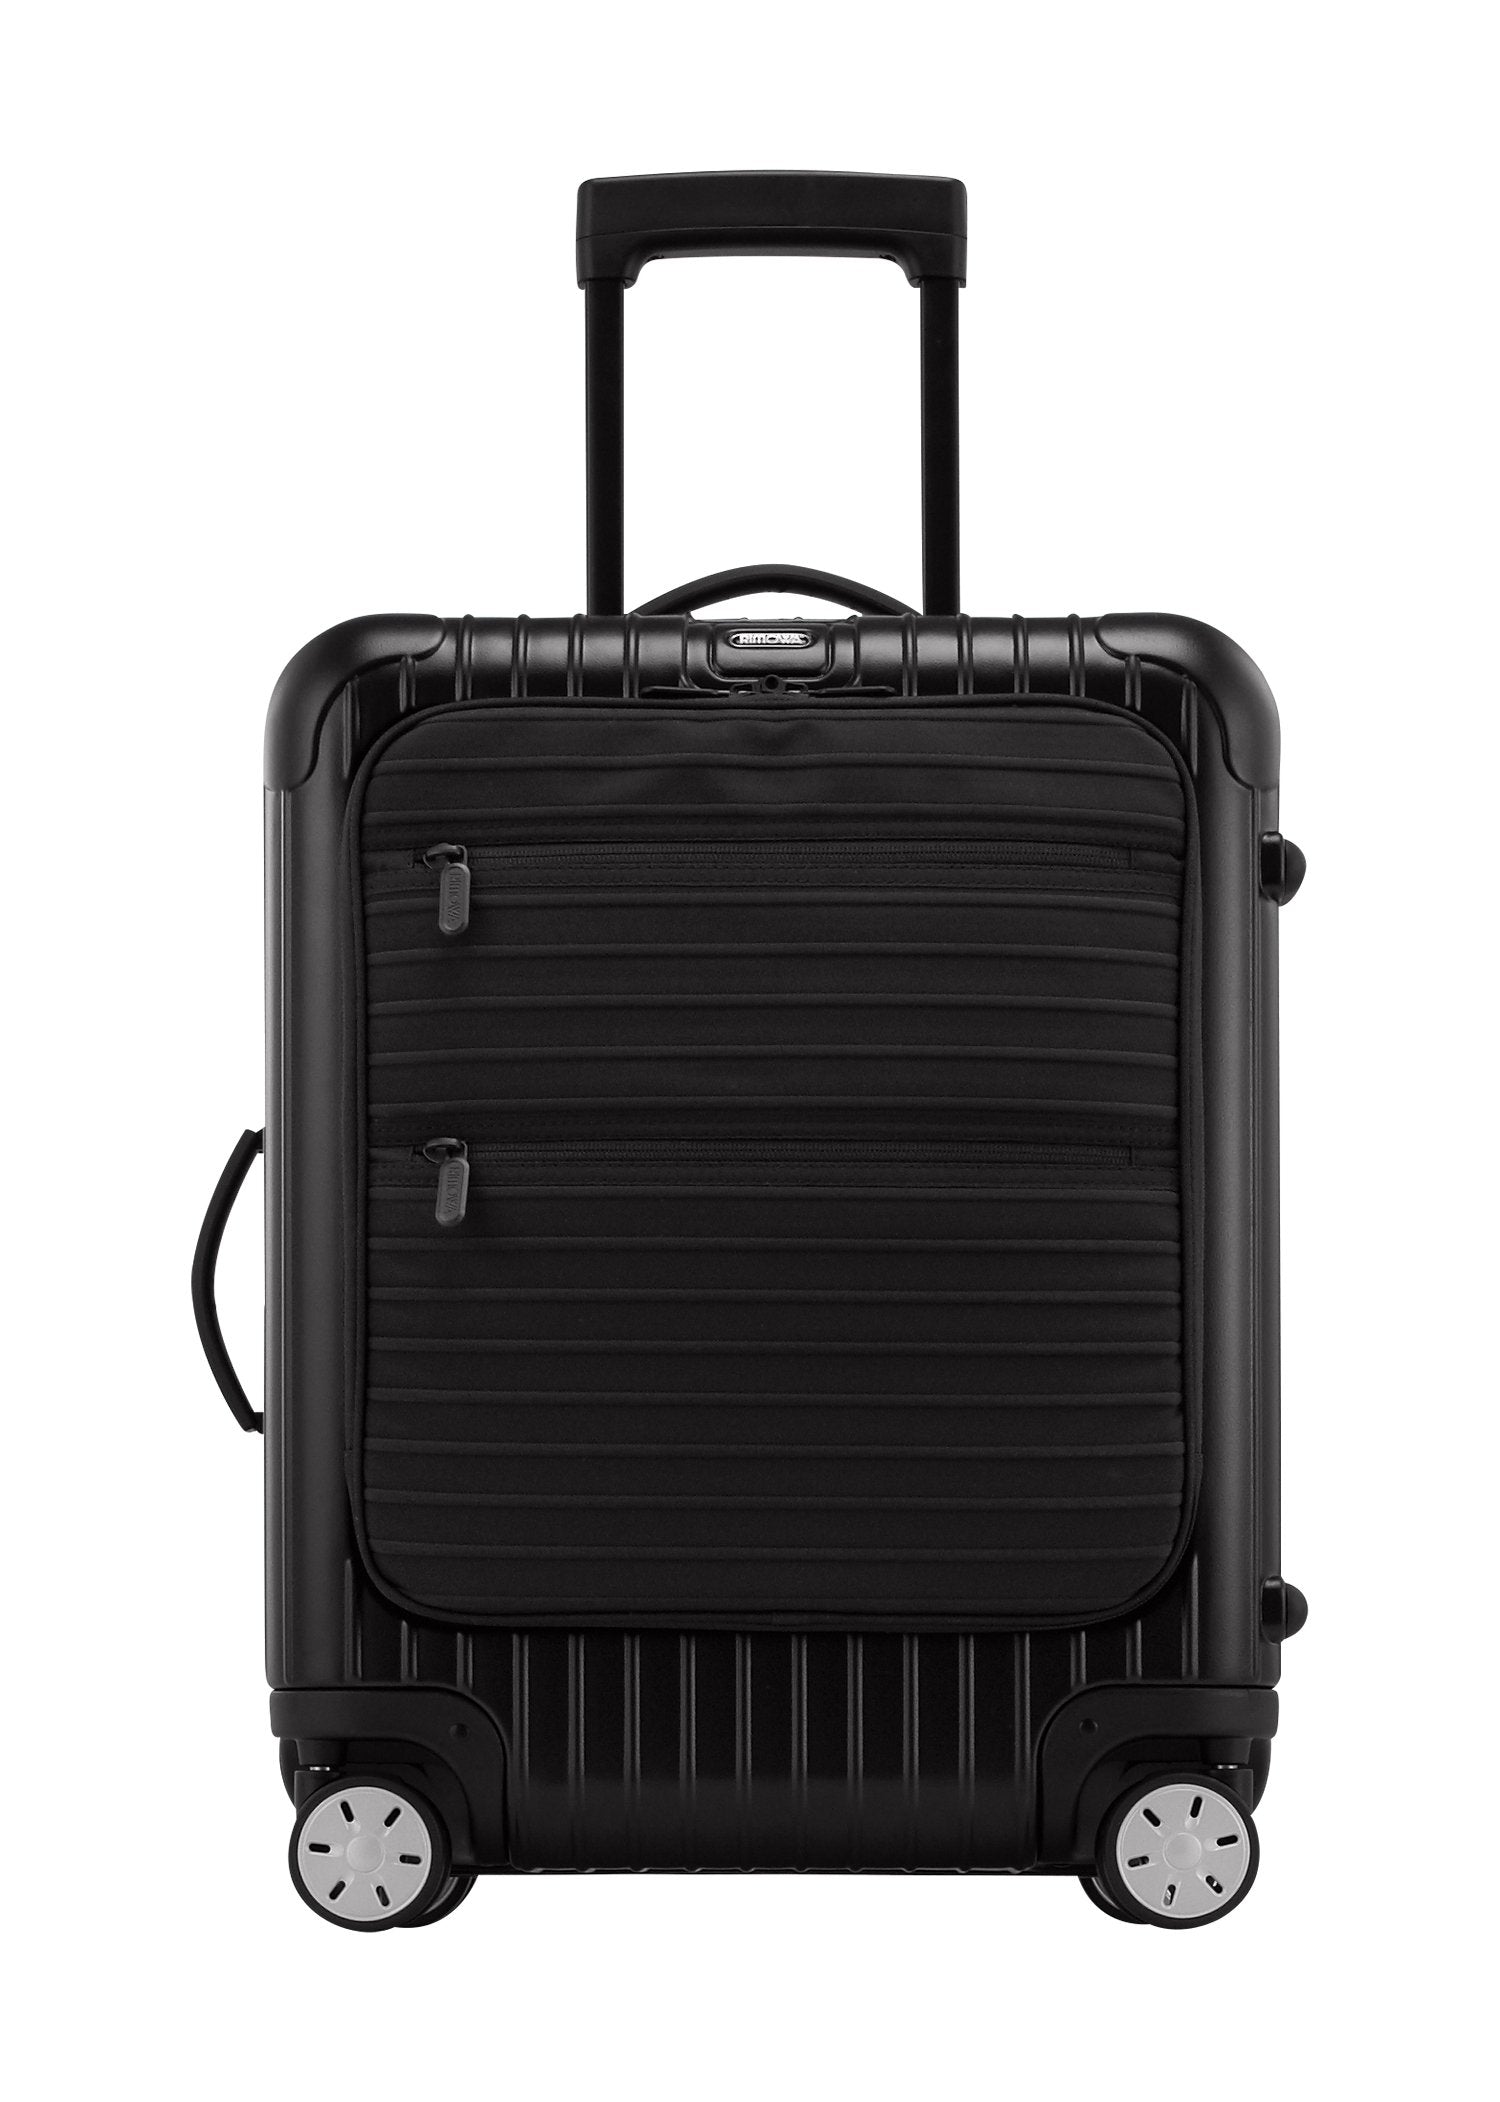 Shop RIMOWA Lufthansa Bolero Collection suitc – Luggage Factory